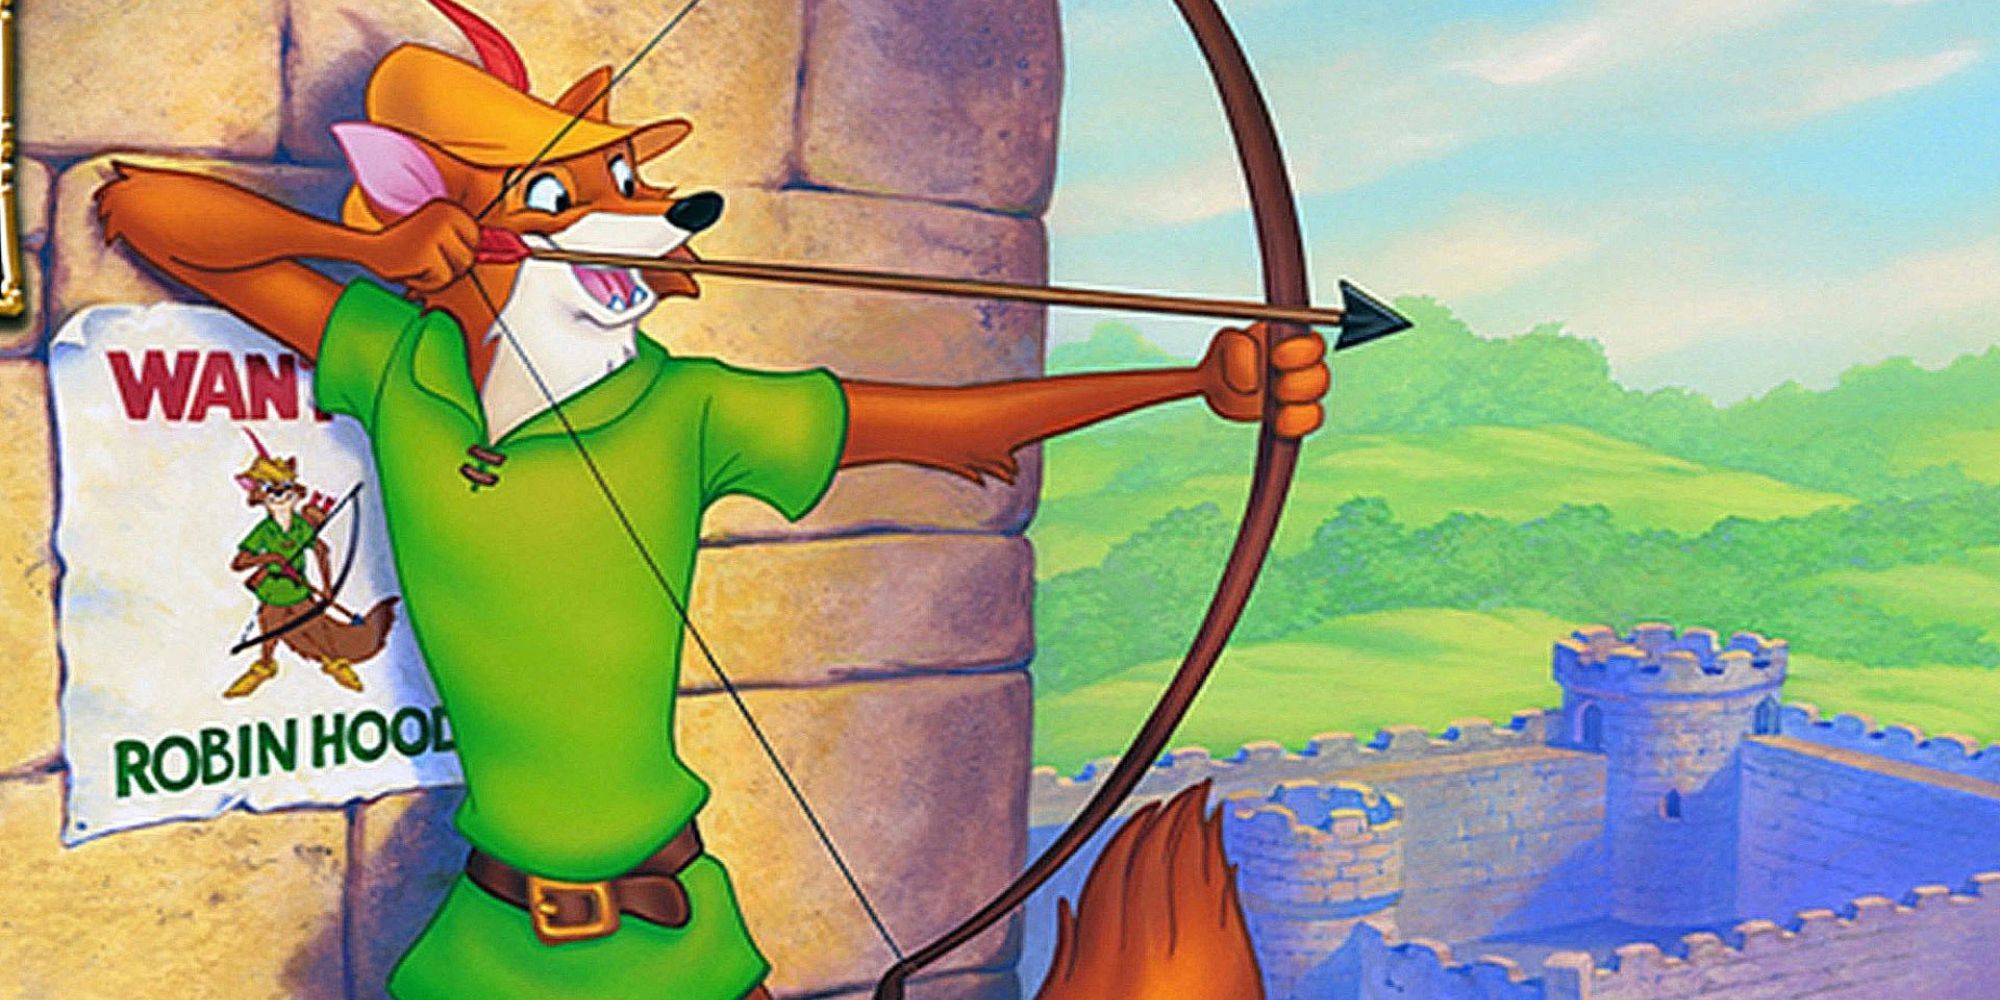 Robin Hood com seu arco e flecha